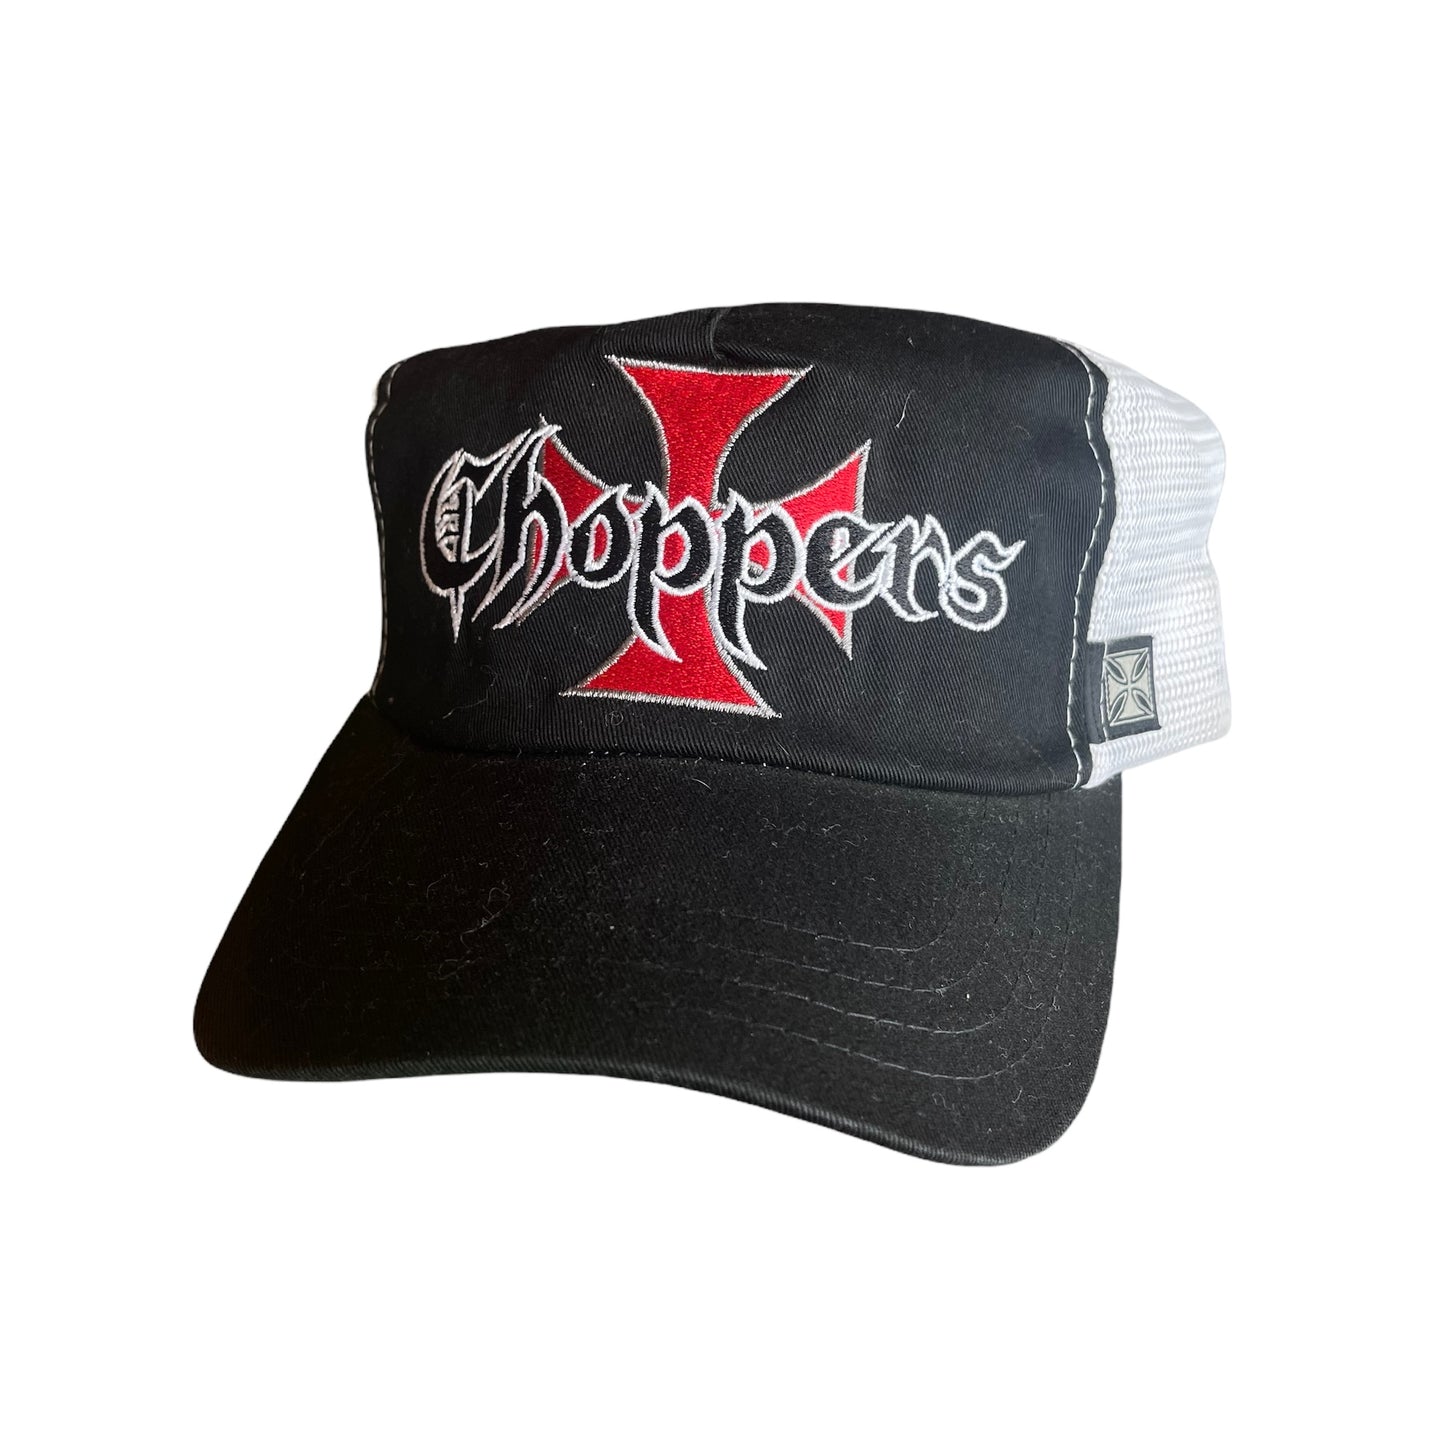 Vintage 90s Choppers Trucker Snap Back Hat